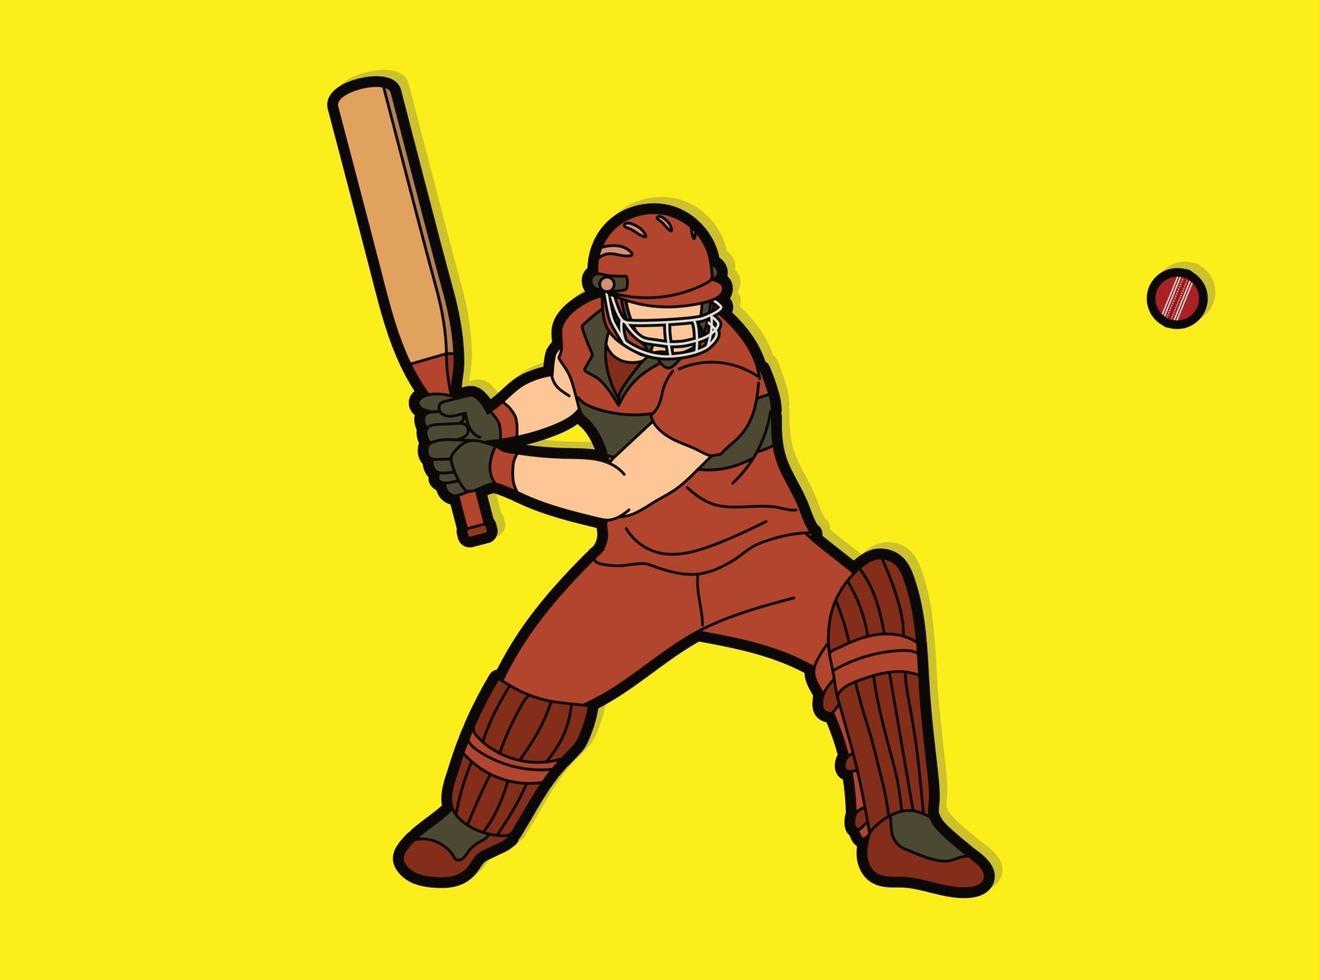 Cricket Player Cartoon Action vector